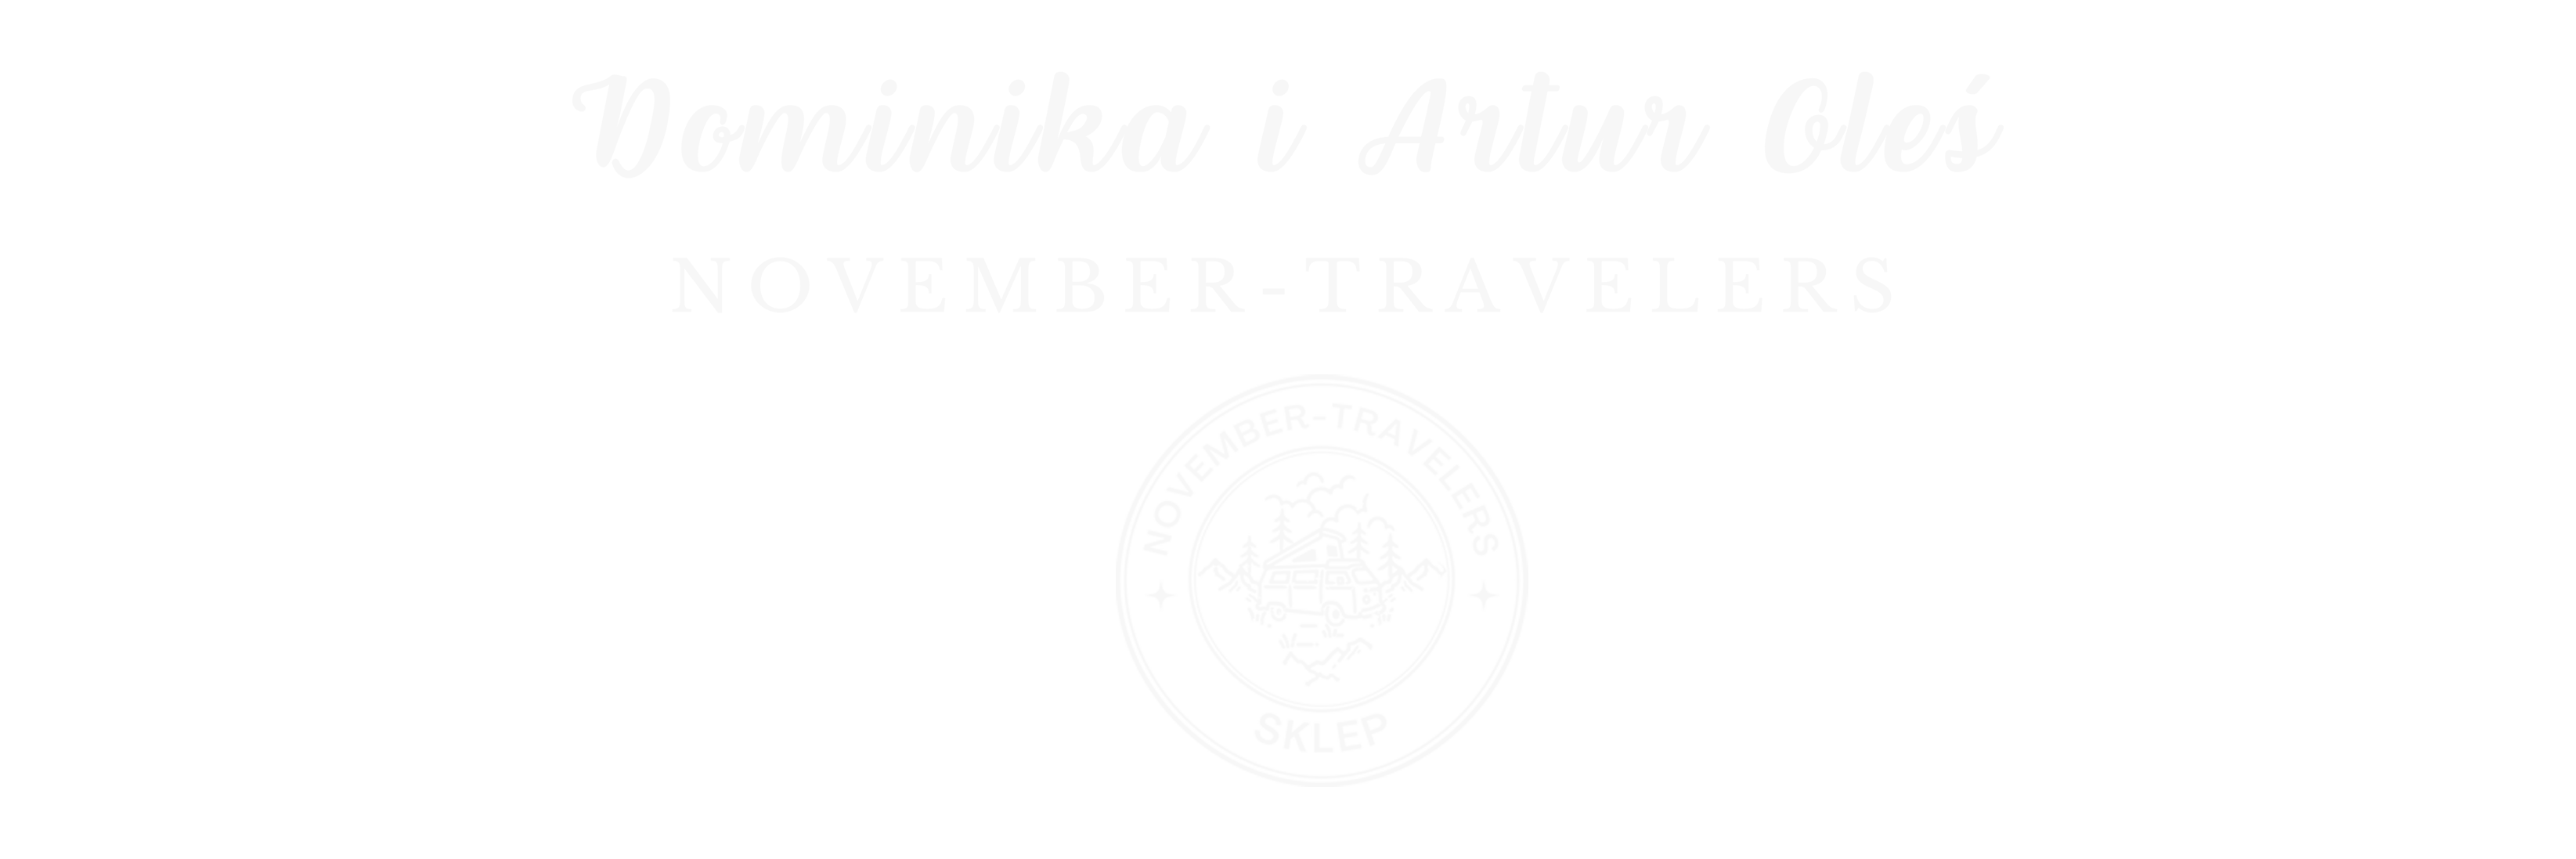 November_travelers